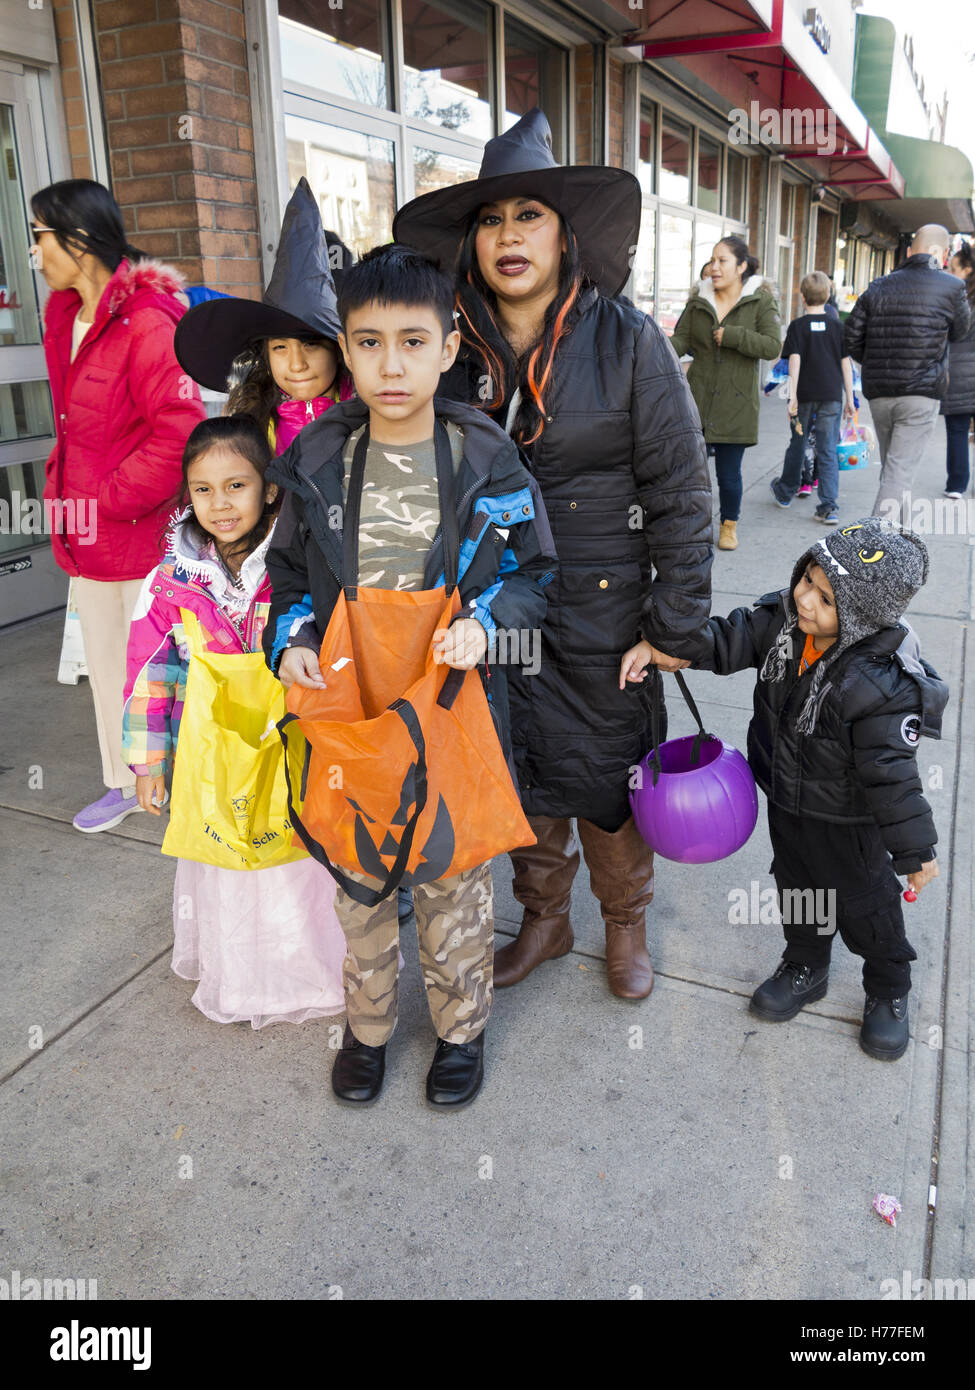 Hispanic family celebrates Halloween in the Bensonhurst section of Brooklyn, New York, 2016. Stock Photo